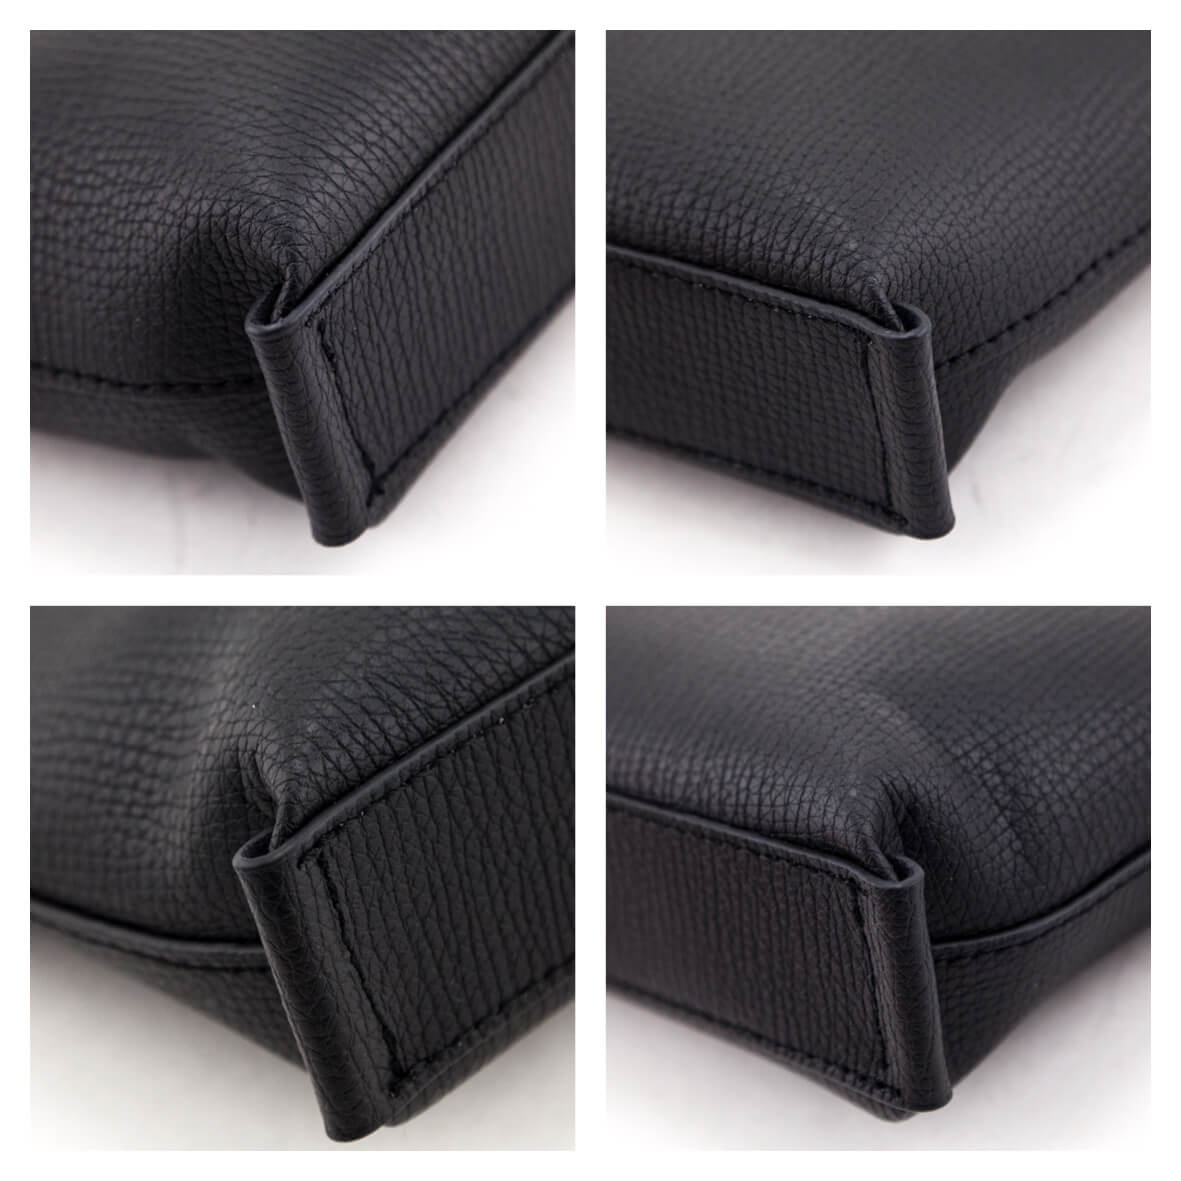 Longchamp Black Grained Calfskin Mailbox Crossbody XS - Love that Bag etc - Preowned Authentic Designer Handbags & Preloved Fashions